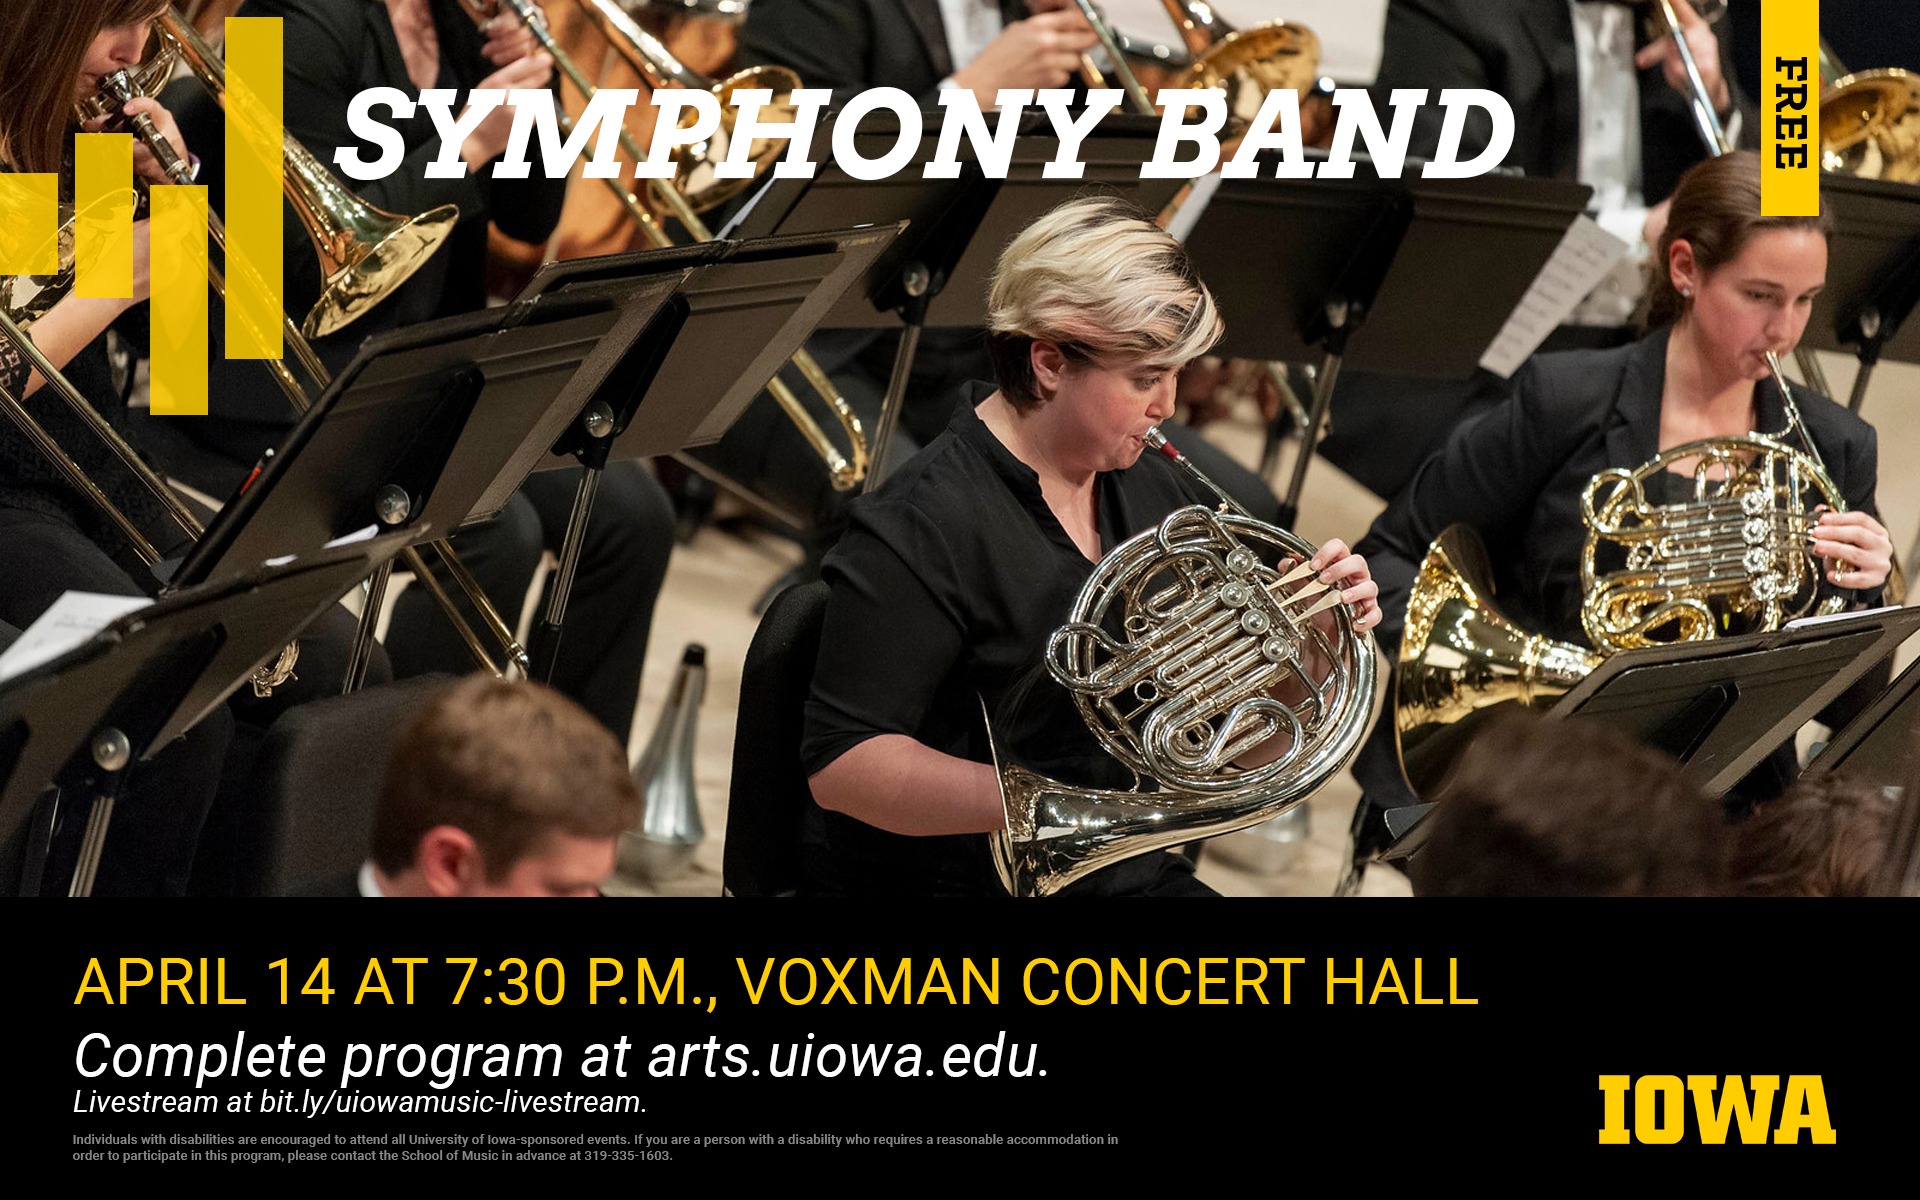 Photo of horn players and larger symphony band. Symphony Band, April 14 at 7:30p.m., Voxman Concert Hall. Complete program at arts.uiowa.edu. Livestream at bit.ly/uiowamusic-livestream. 